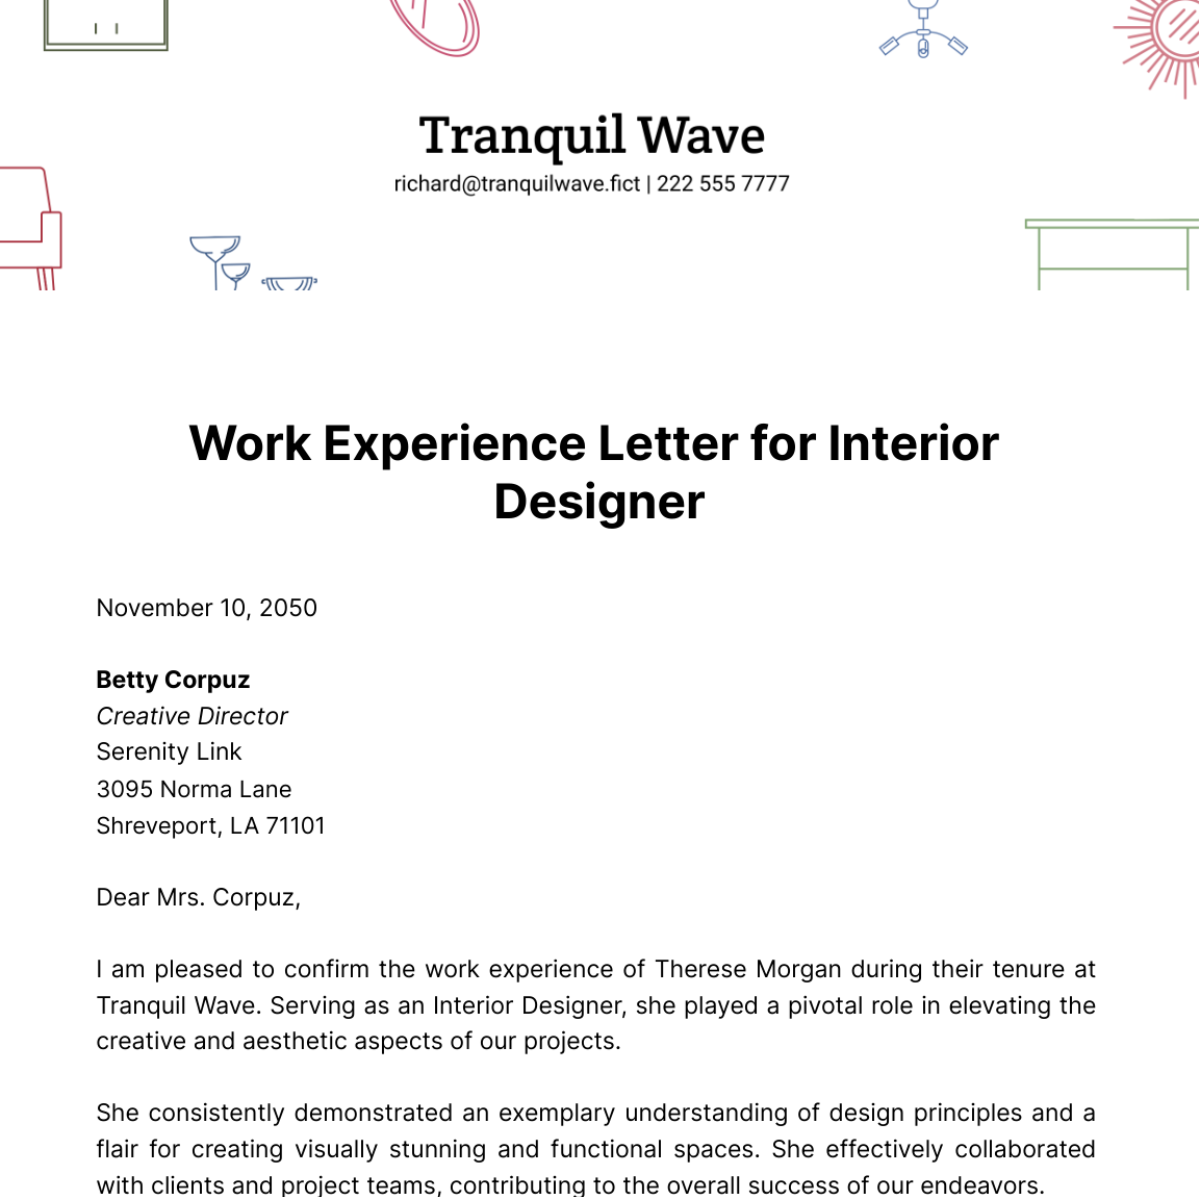 Work Experience Letter for Interior Designer Template